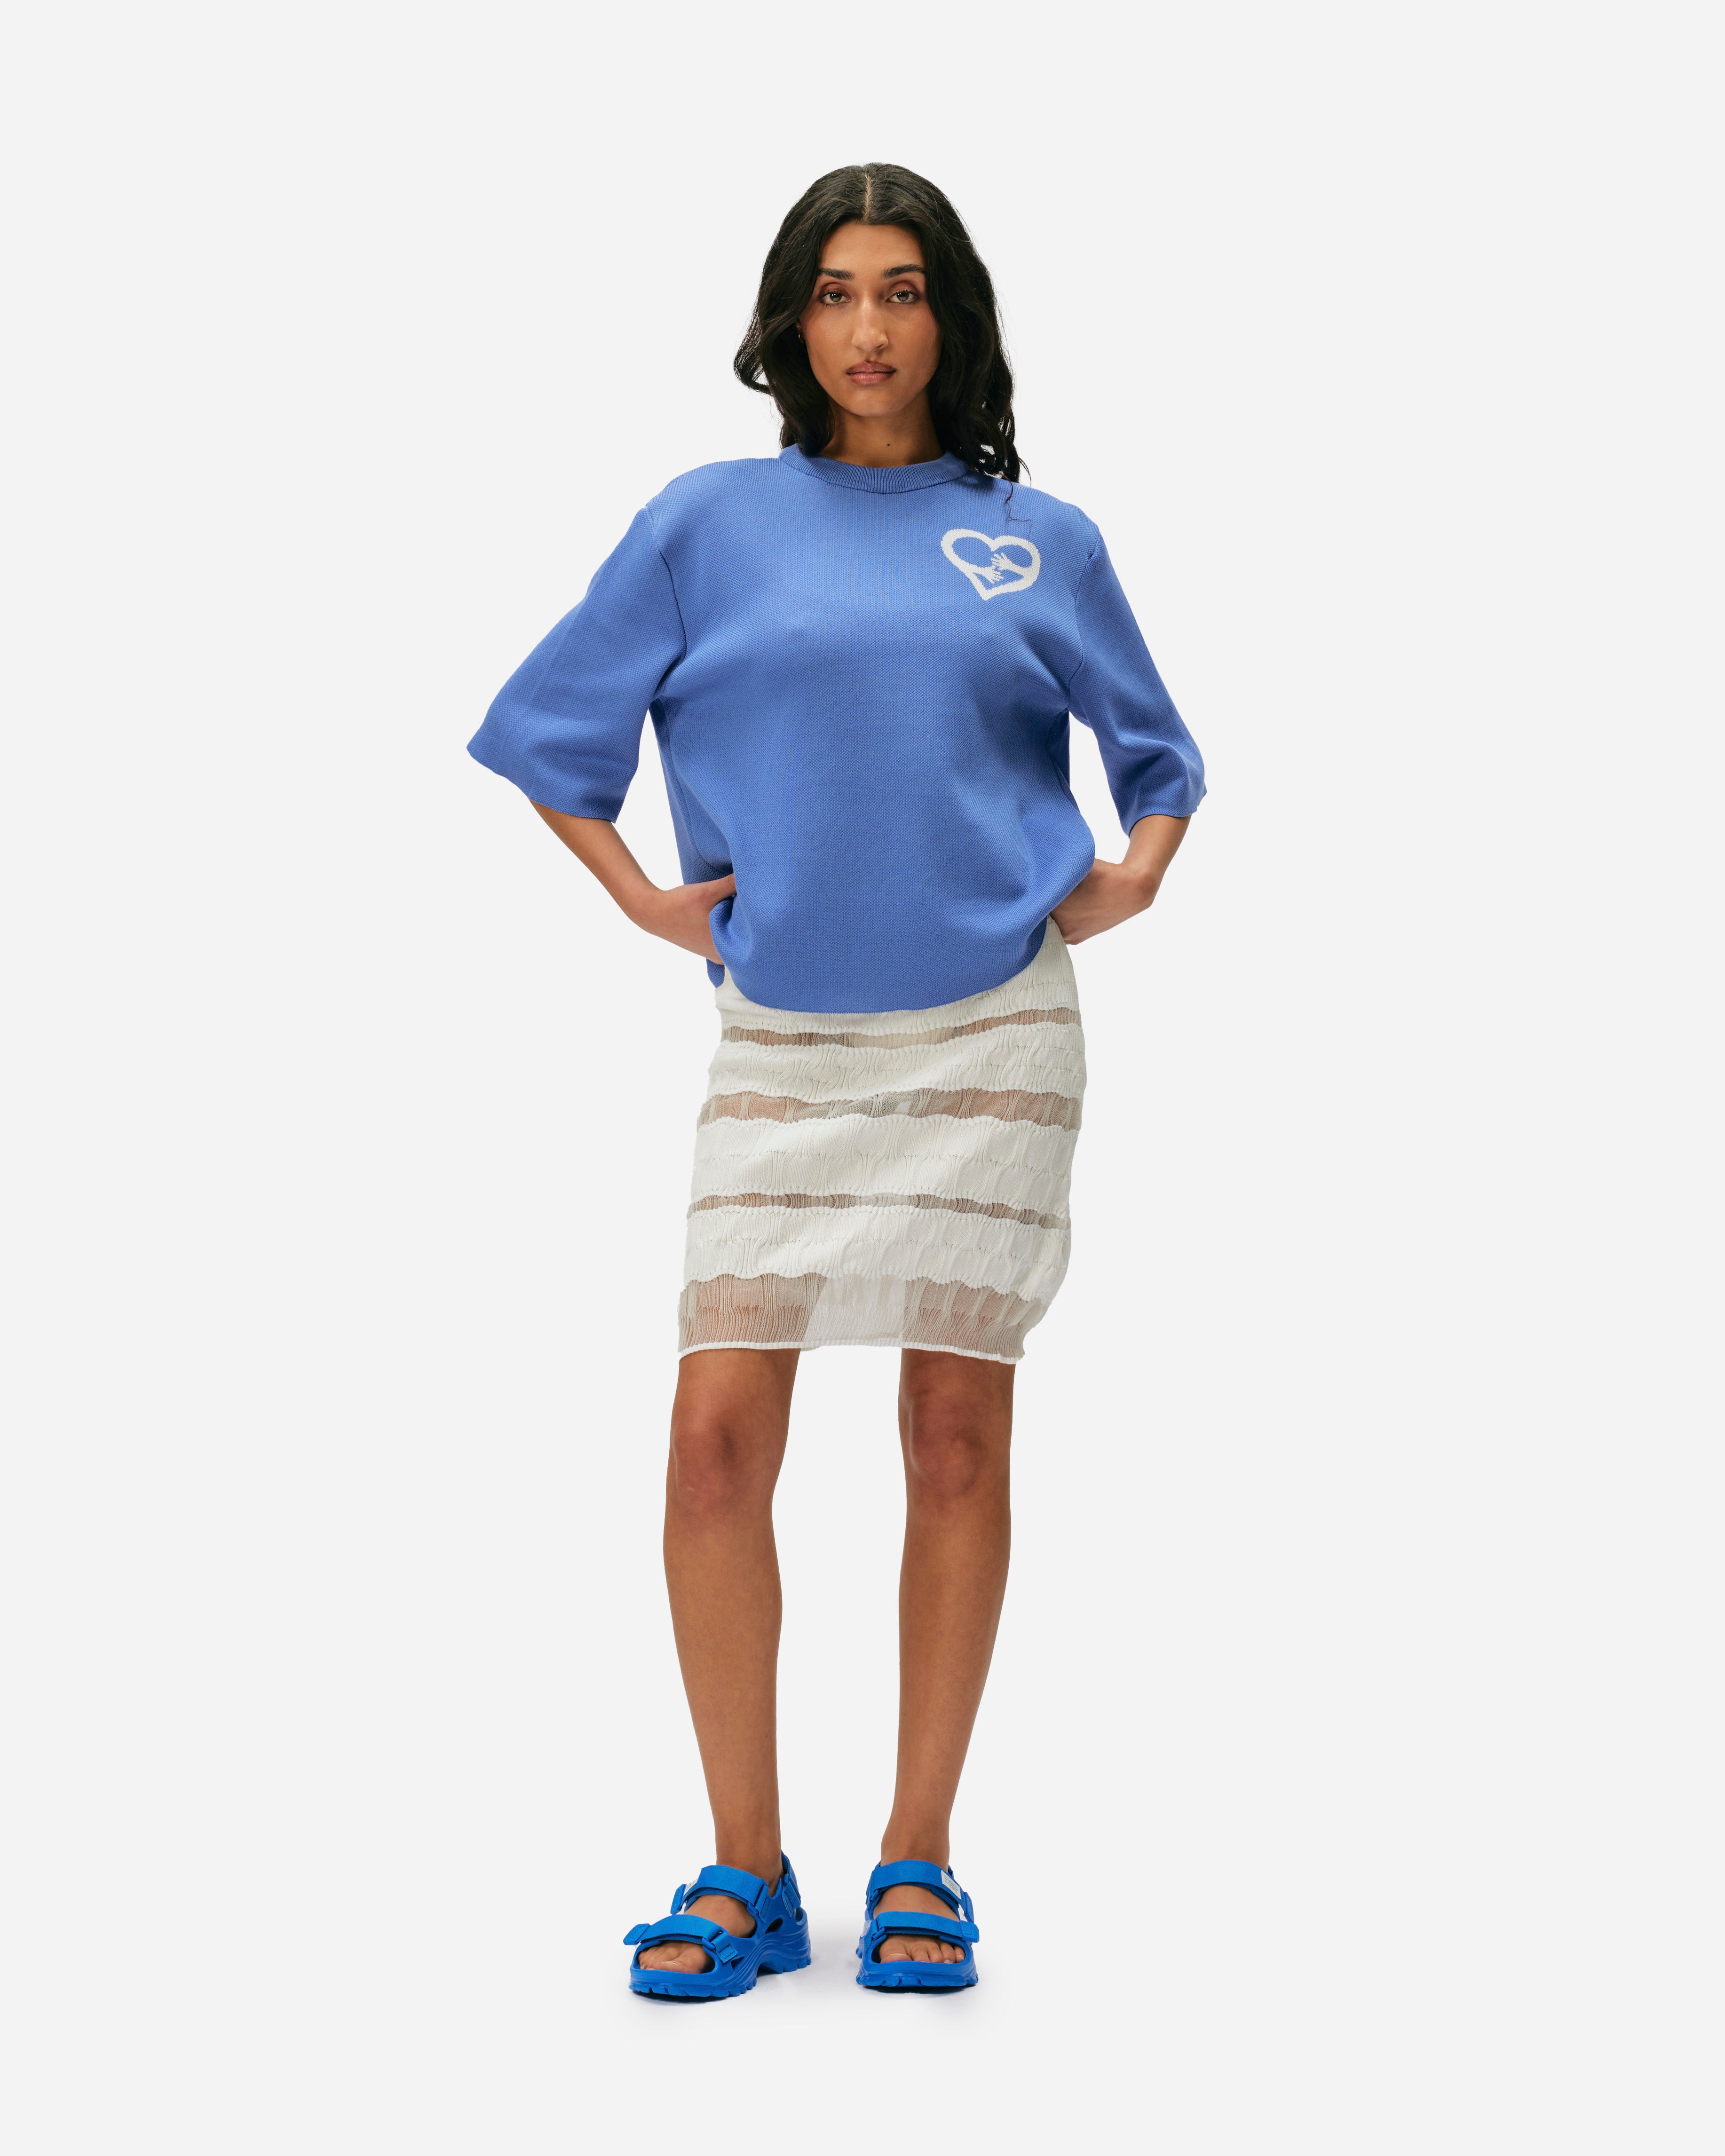 Nadia Wire Revolutionize T-Shirt Blue 871-blue